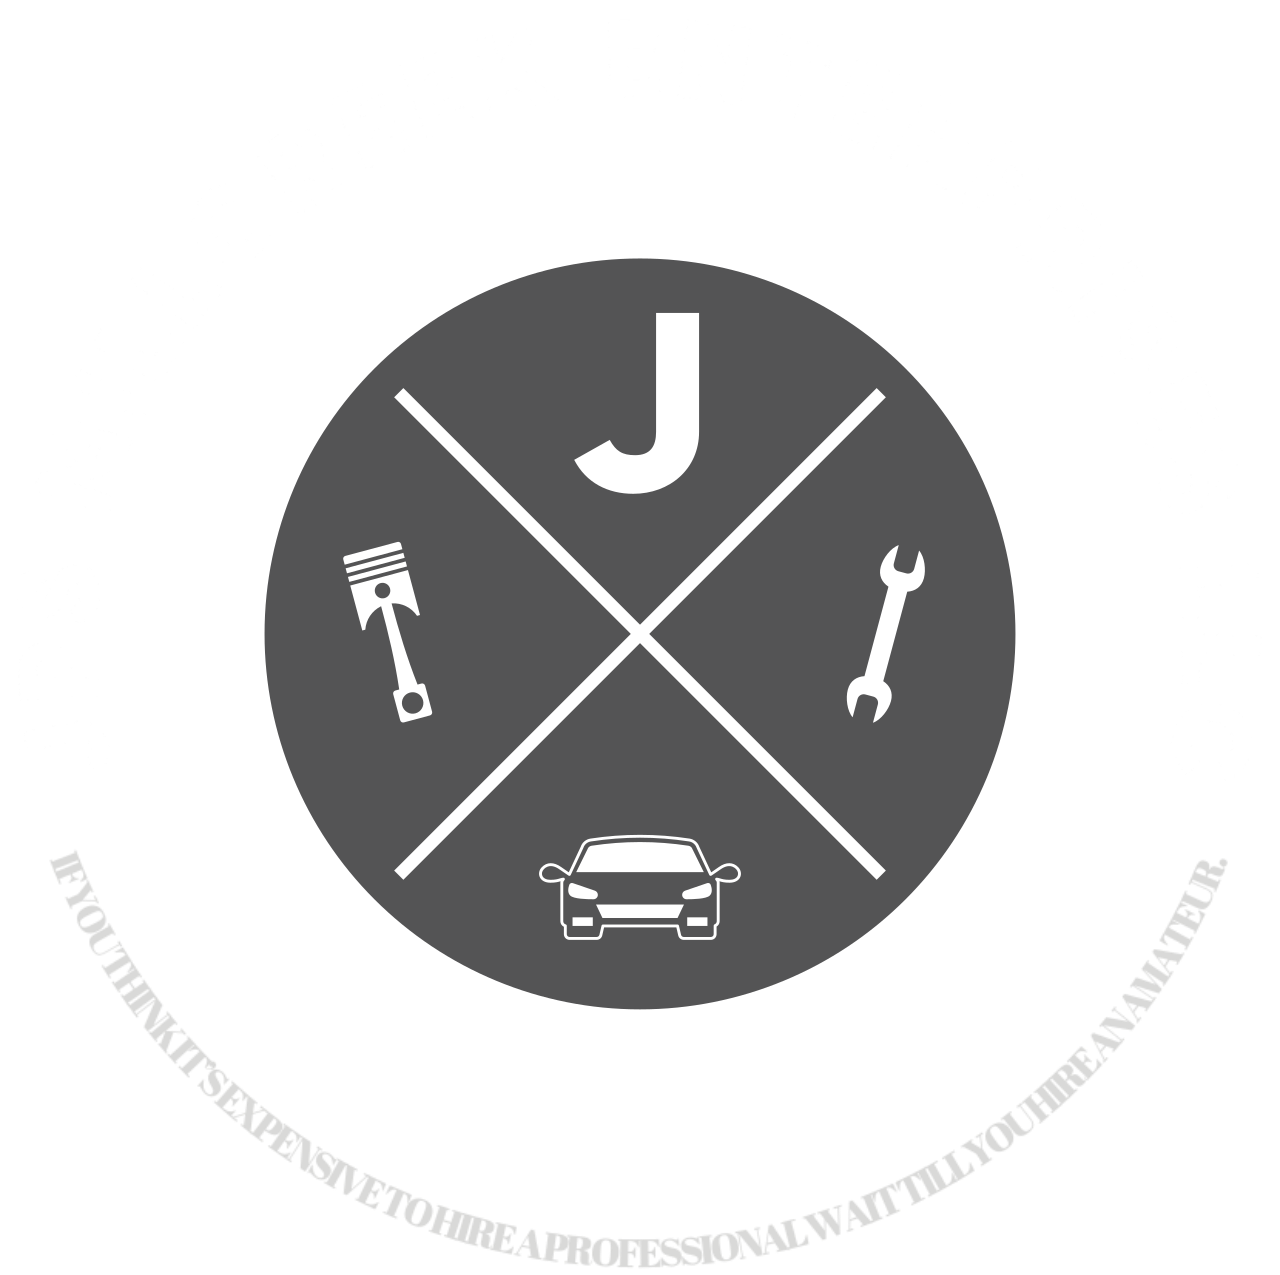 JPS MILLCREEK ENTERPRISES LLC's logo